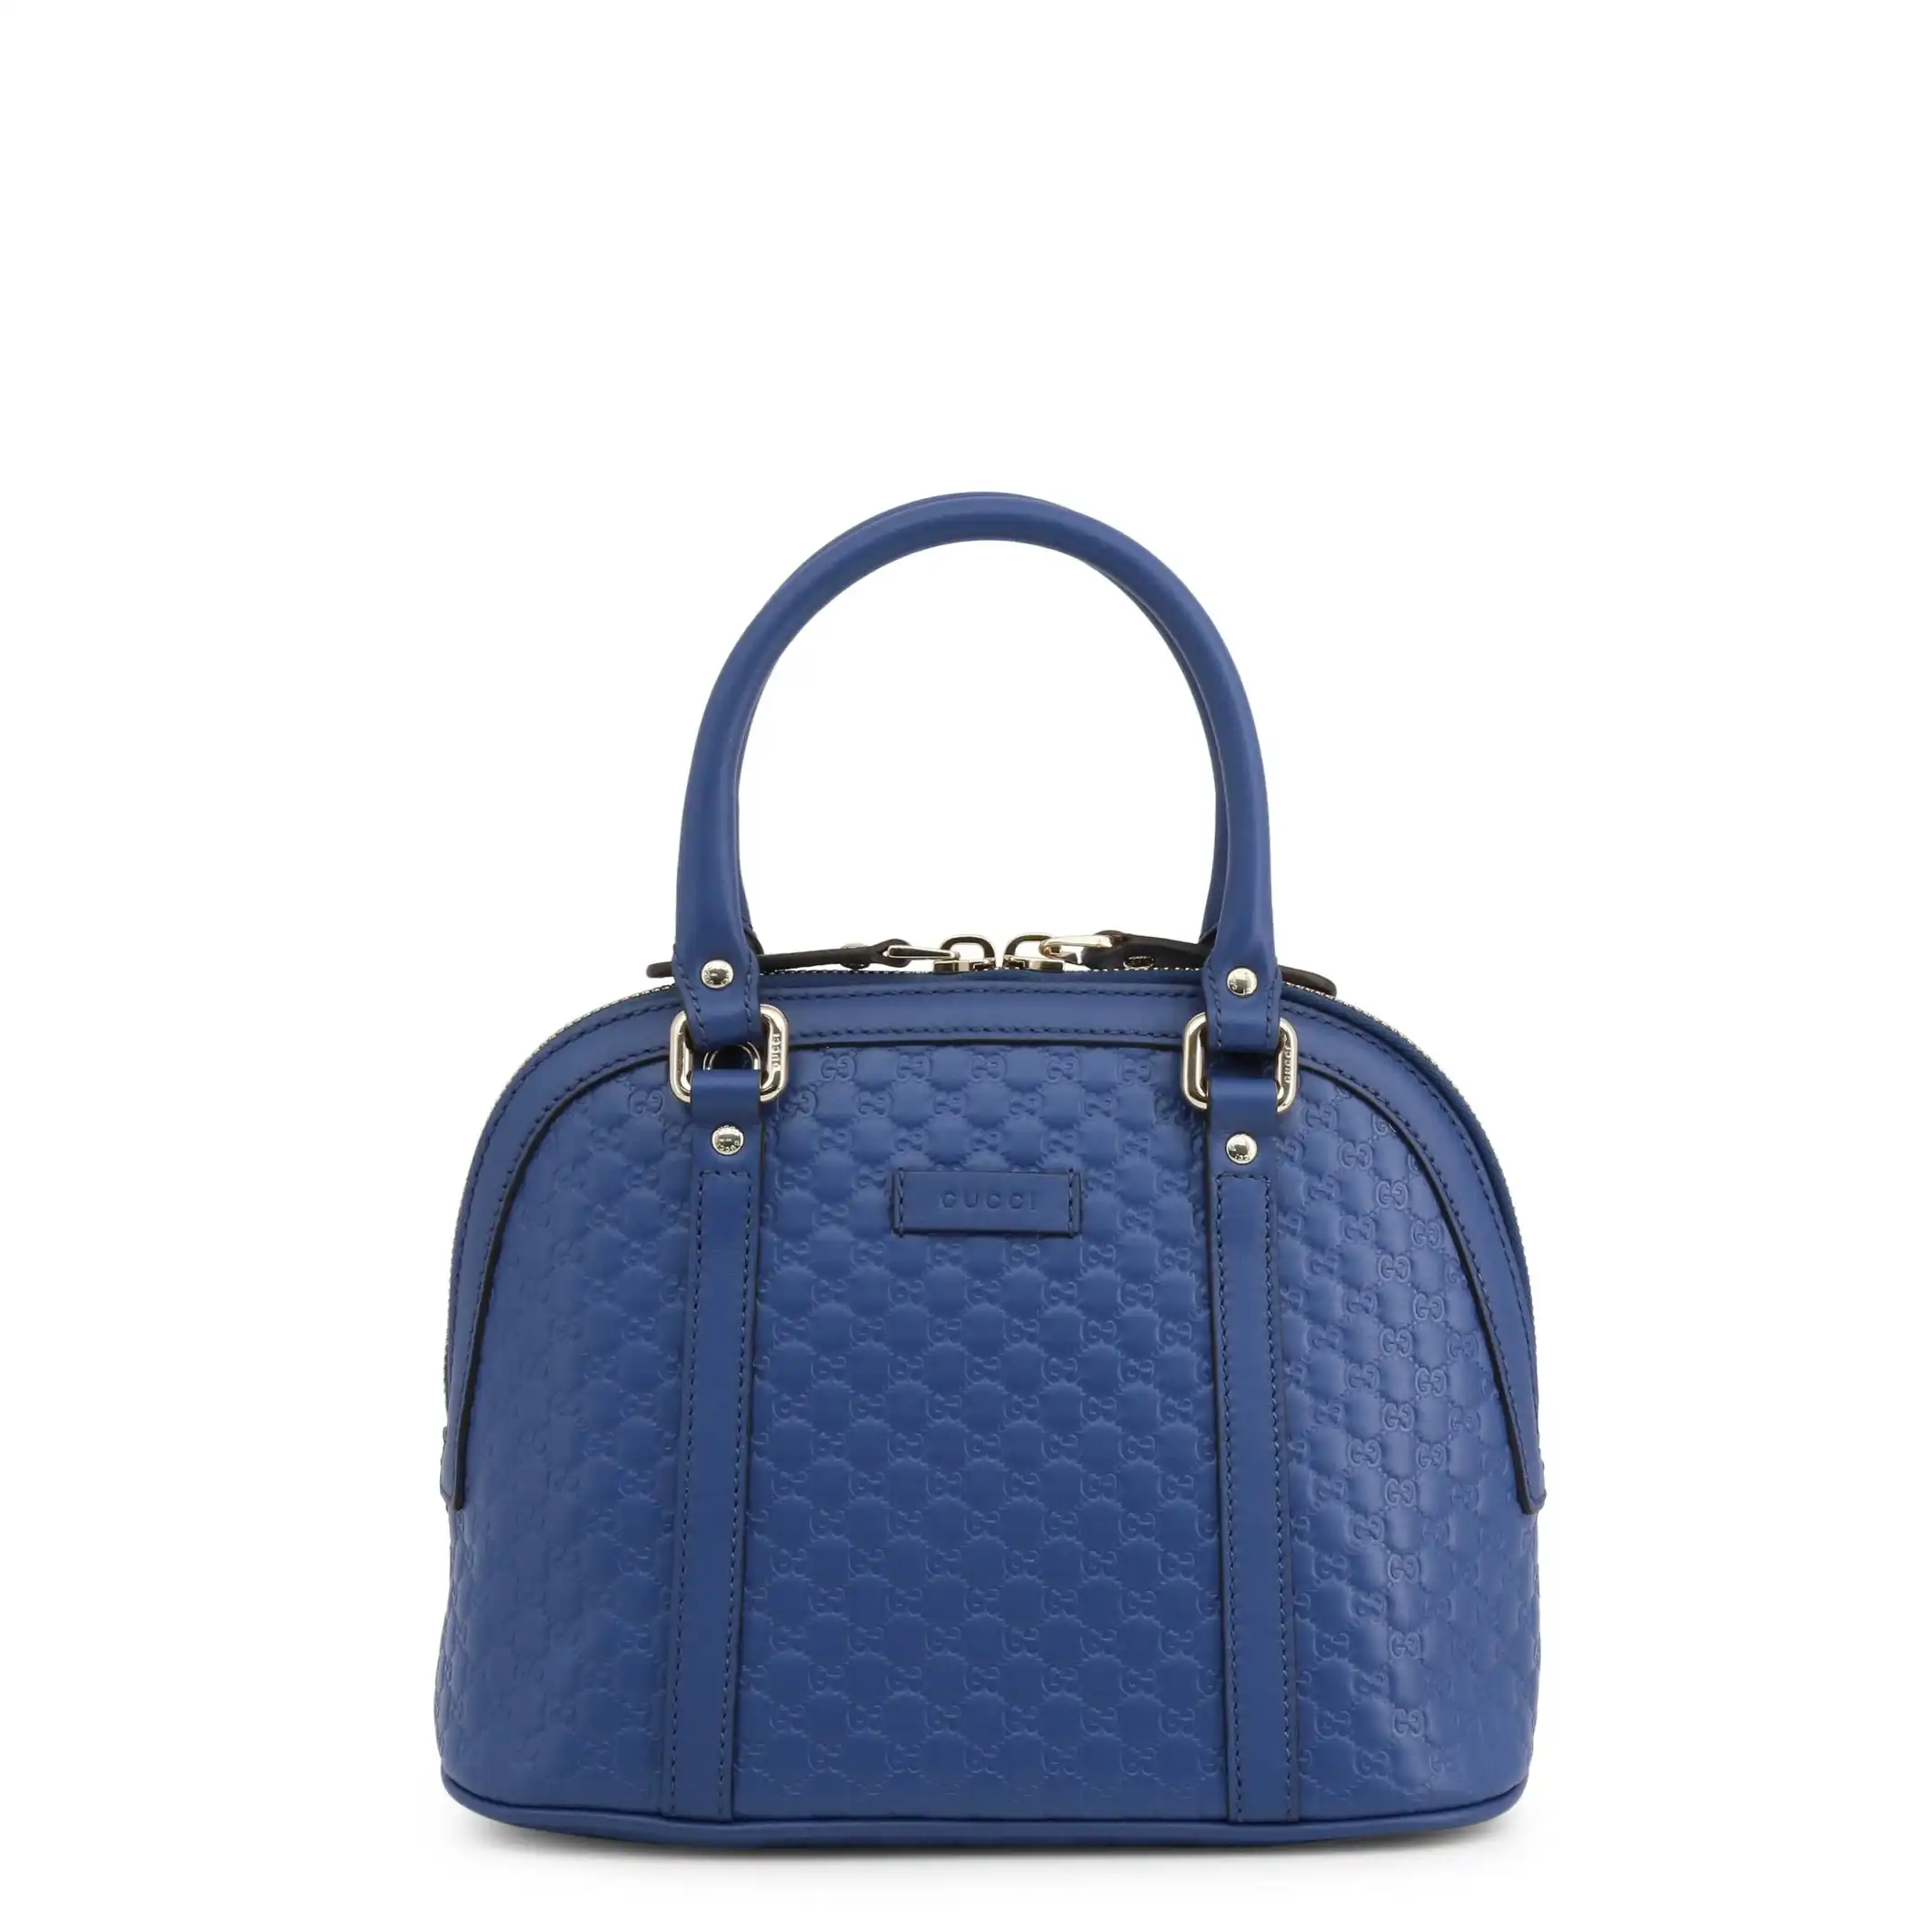 Gucci Women's Handbag